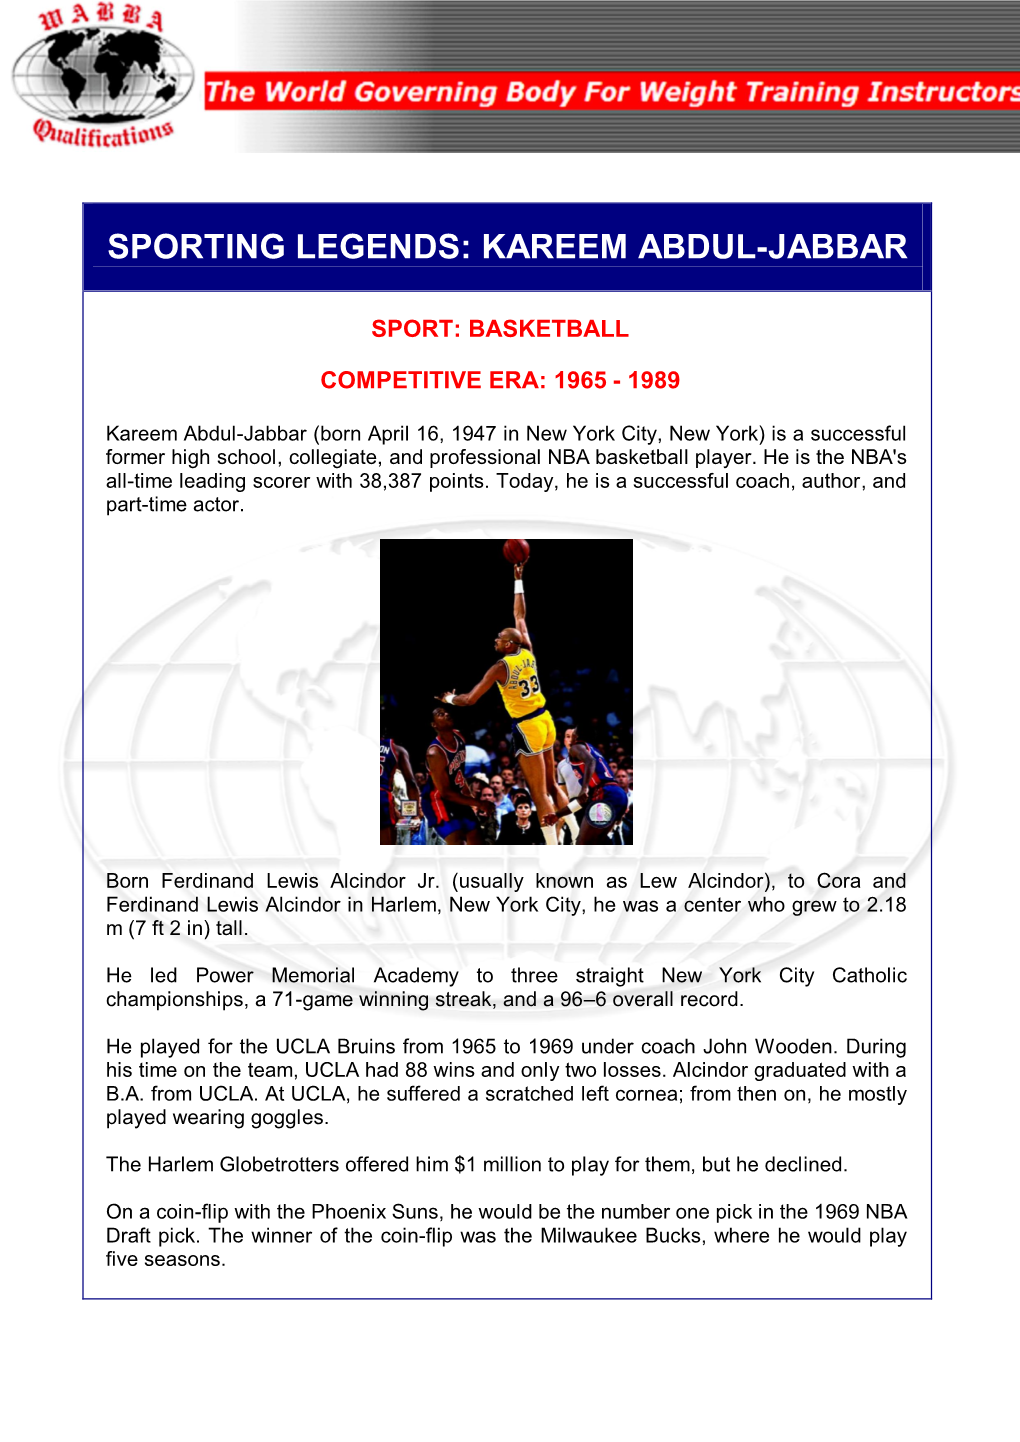 Sporting Legends: Kareem Abdul-Jabbar